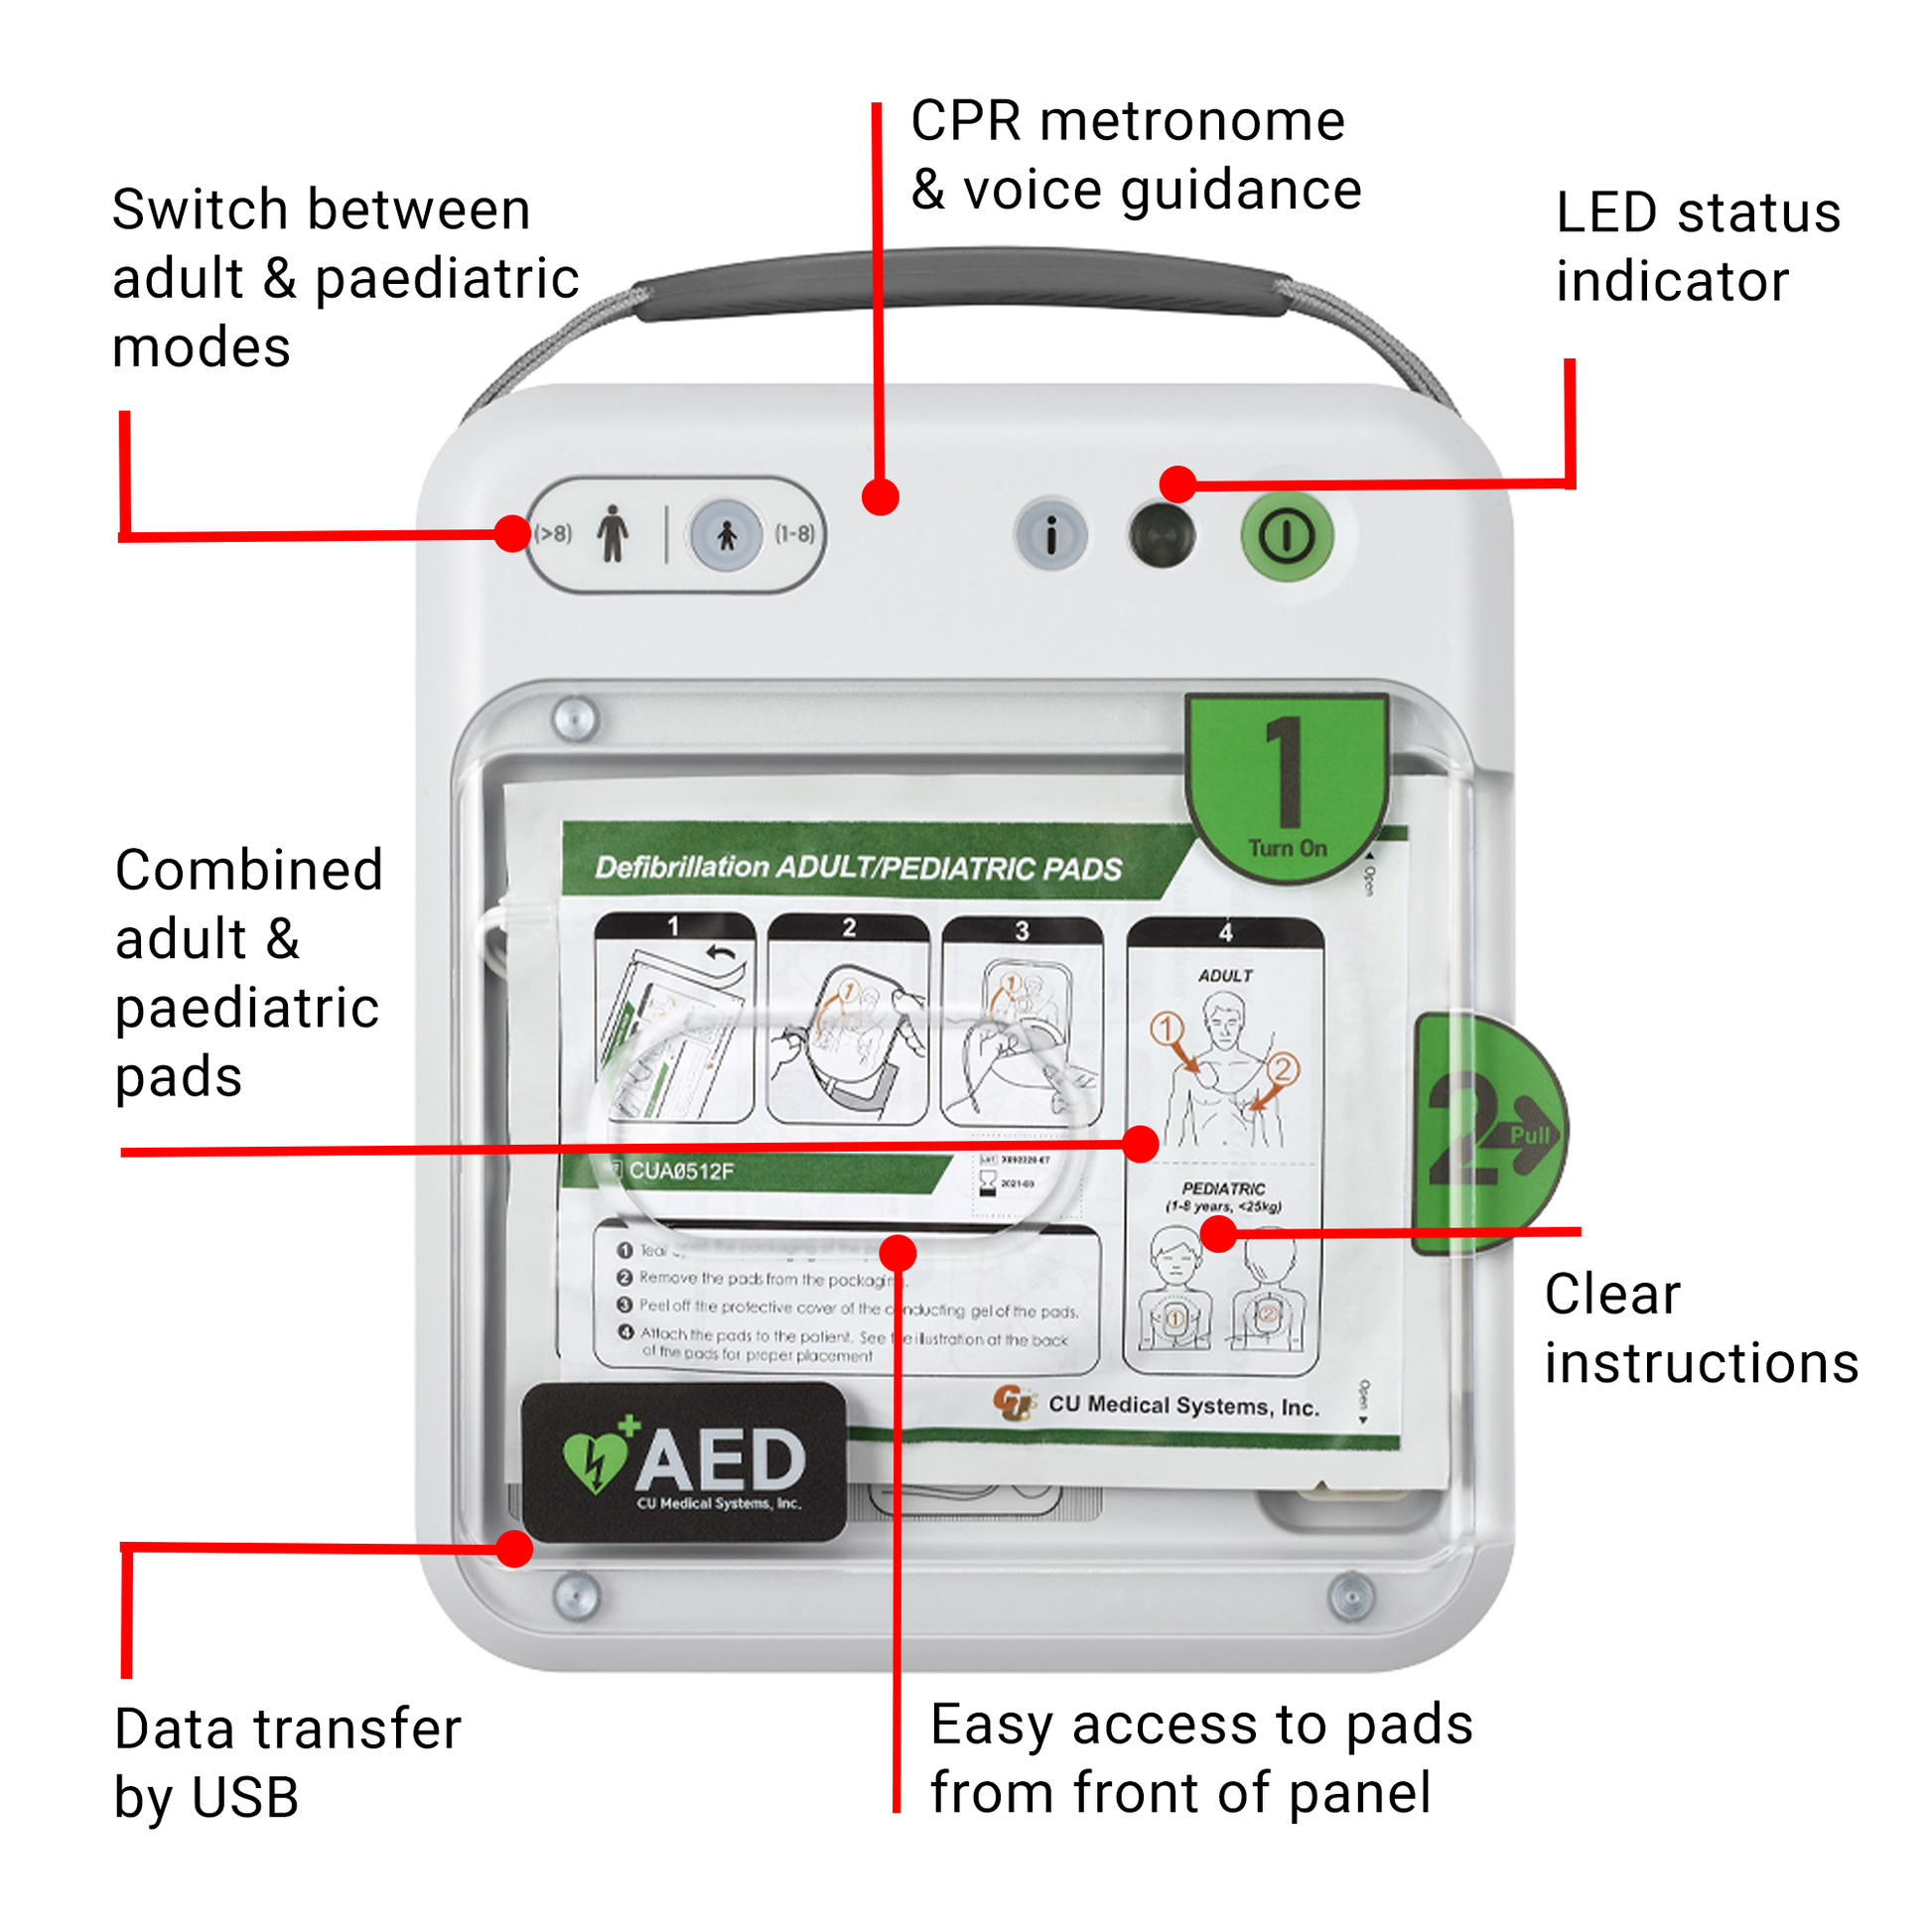 iPAD NFK200 Semi-Automatic Defibrillator explainer.